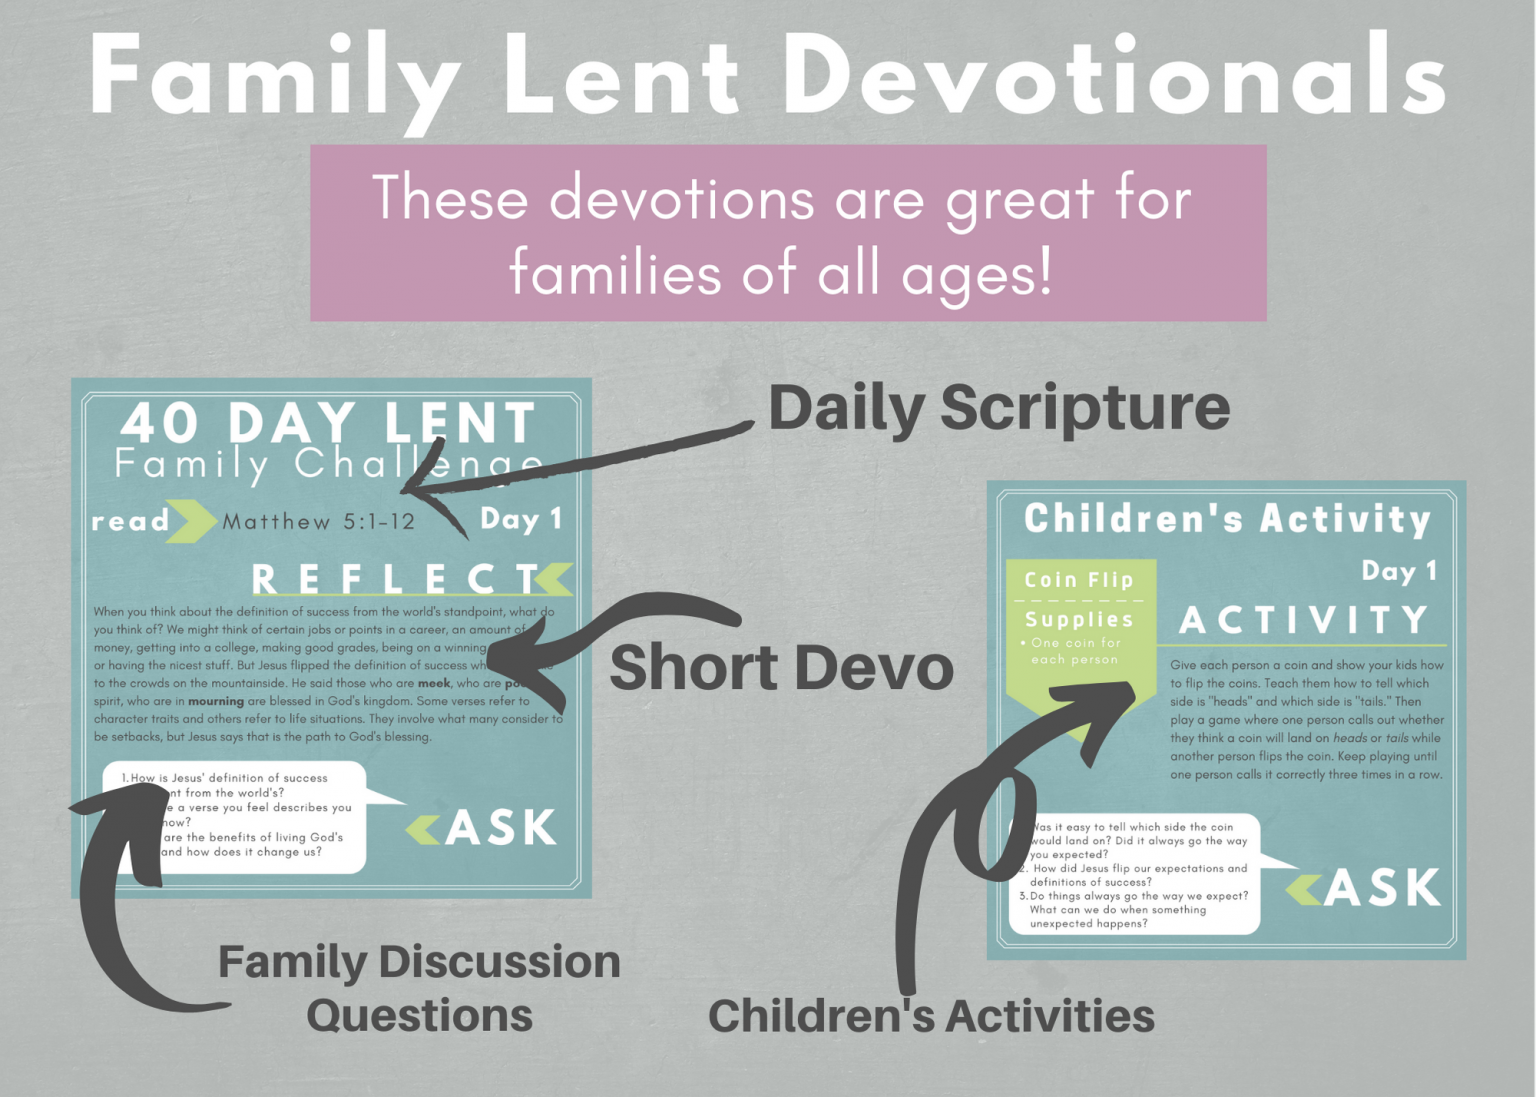 40 Day Lent Family Devotional Deeper KidMin